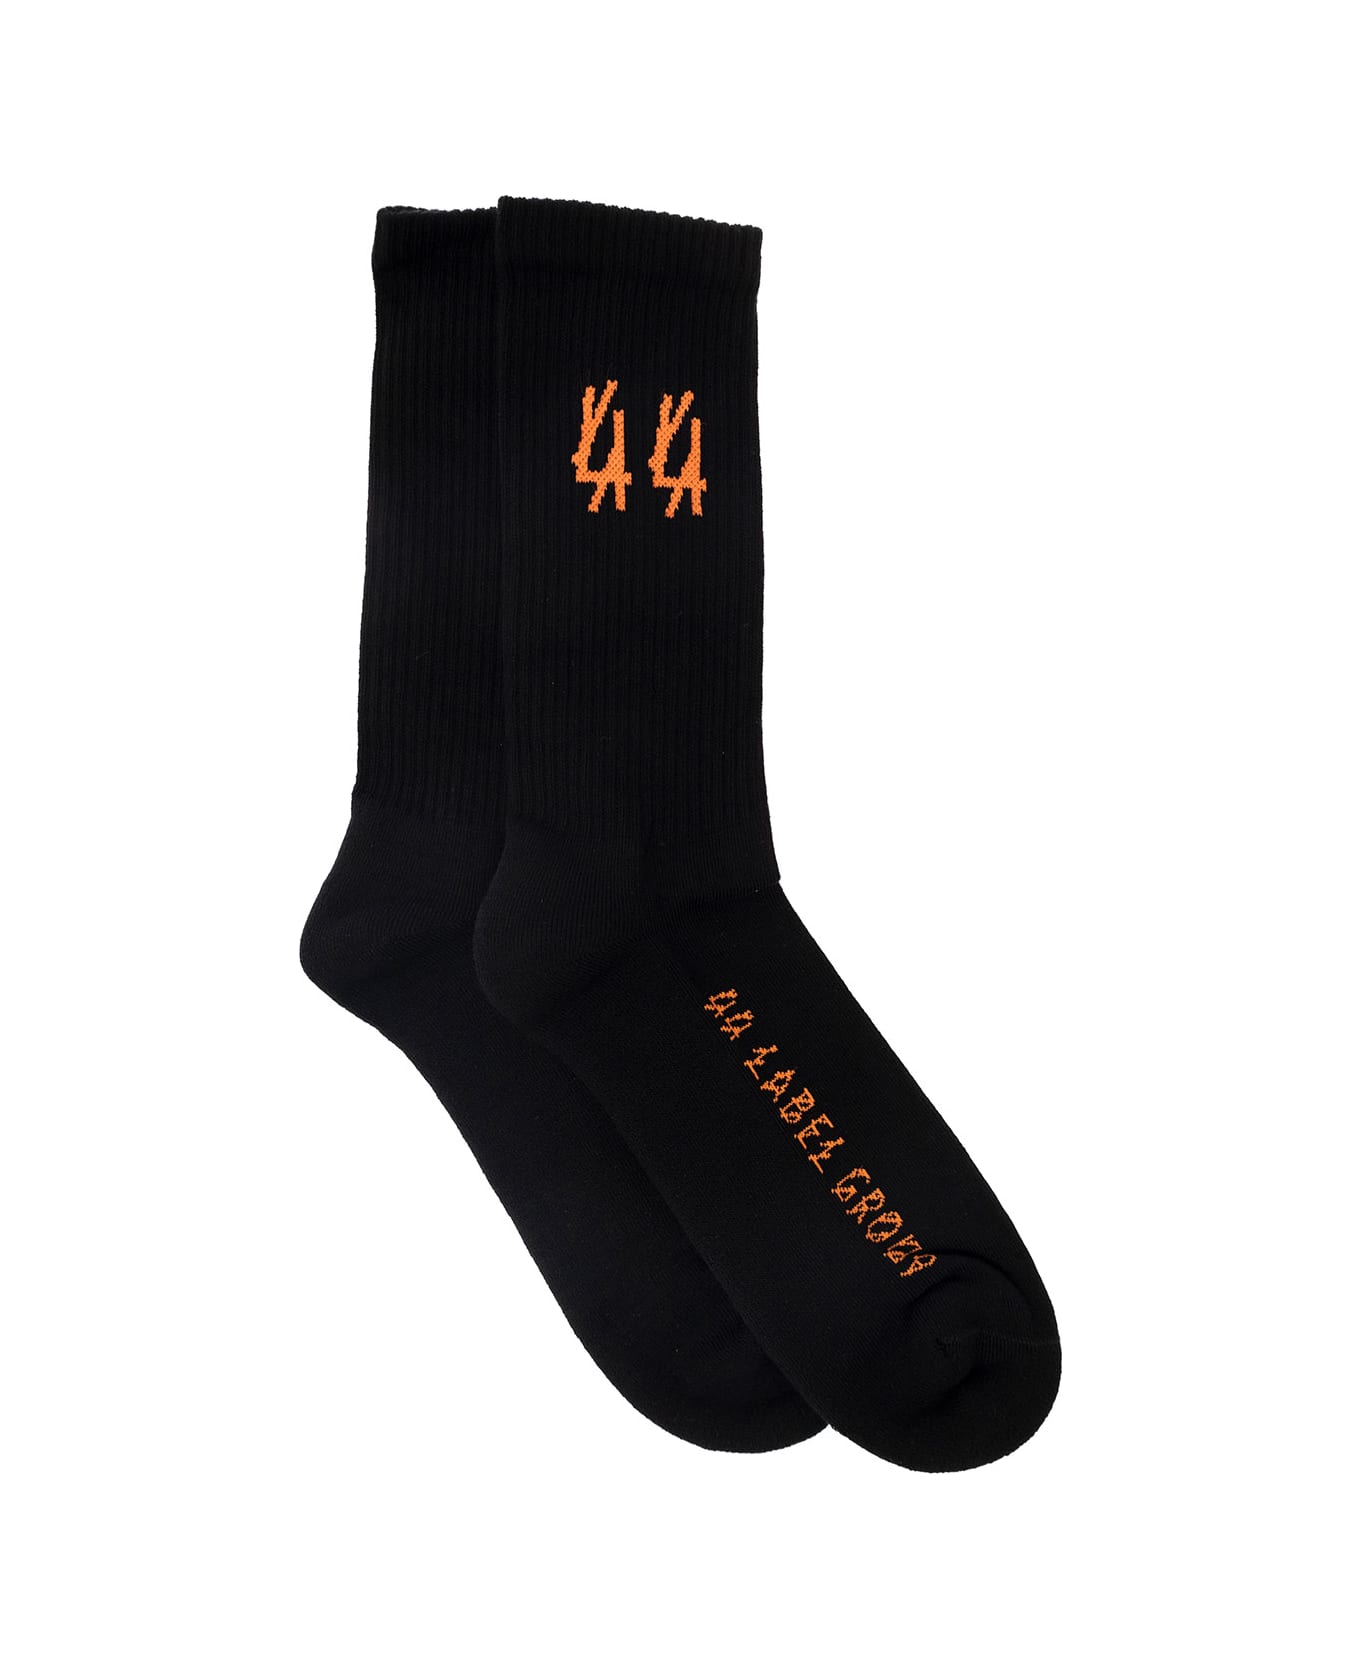 44 Label Group Black Socks With Contrasting Logo Detail In Cotton Blend Man - Black